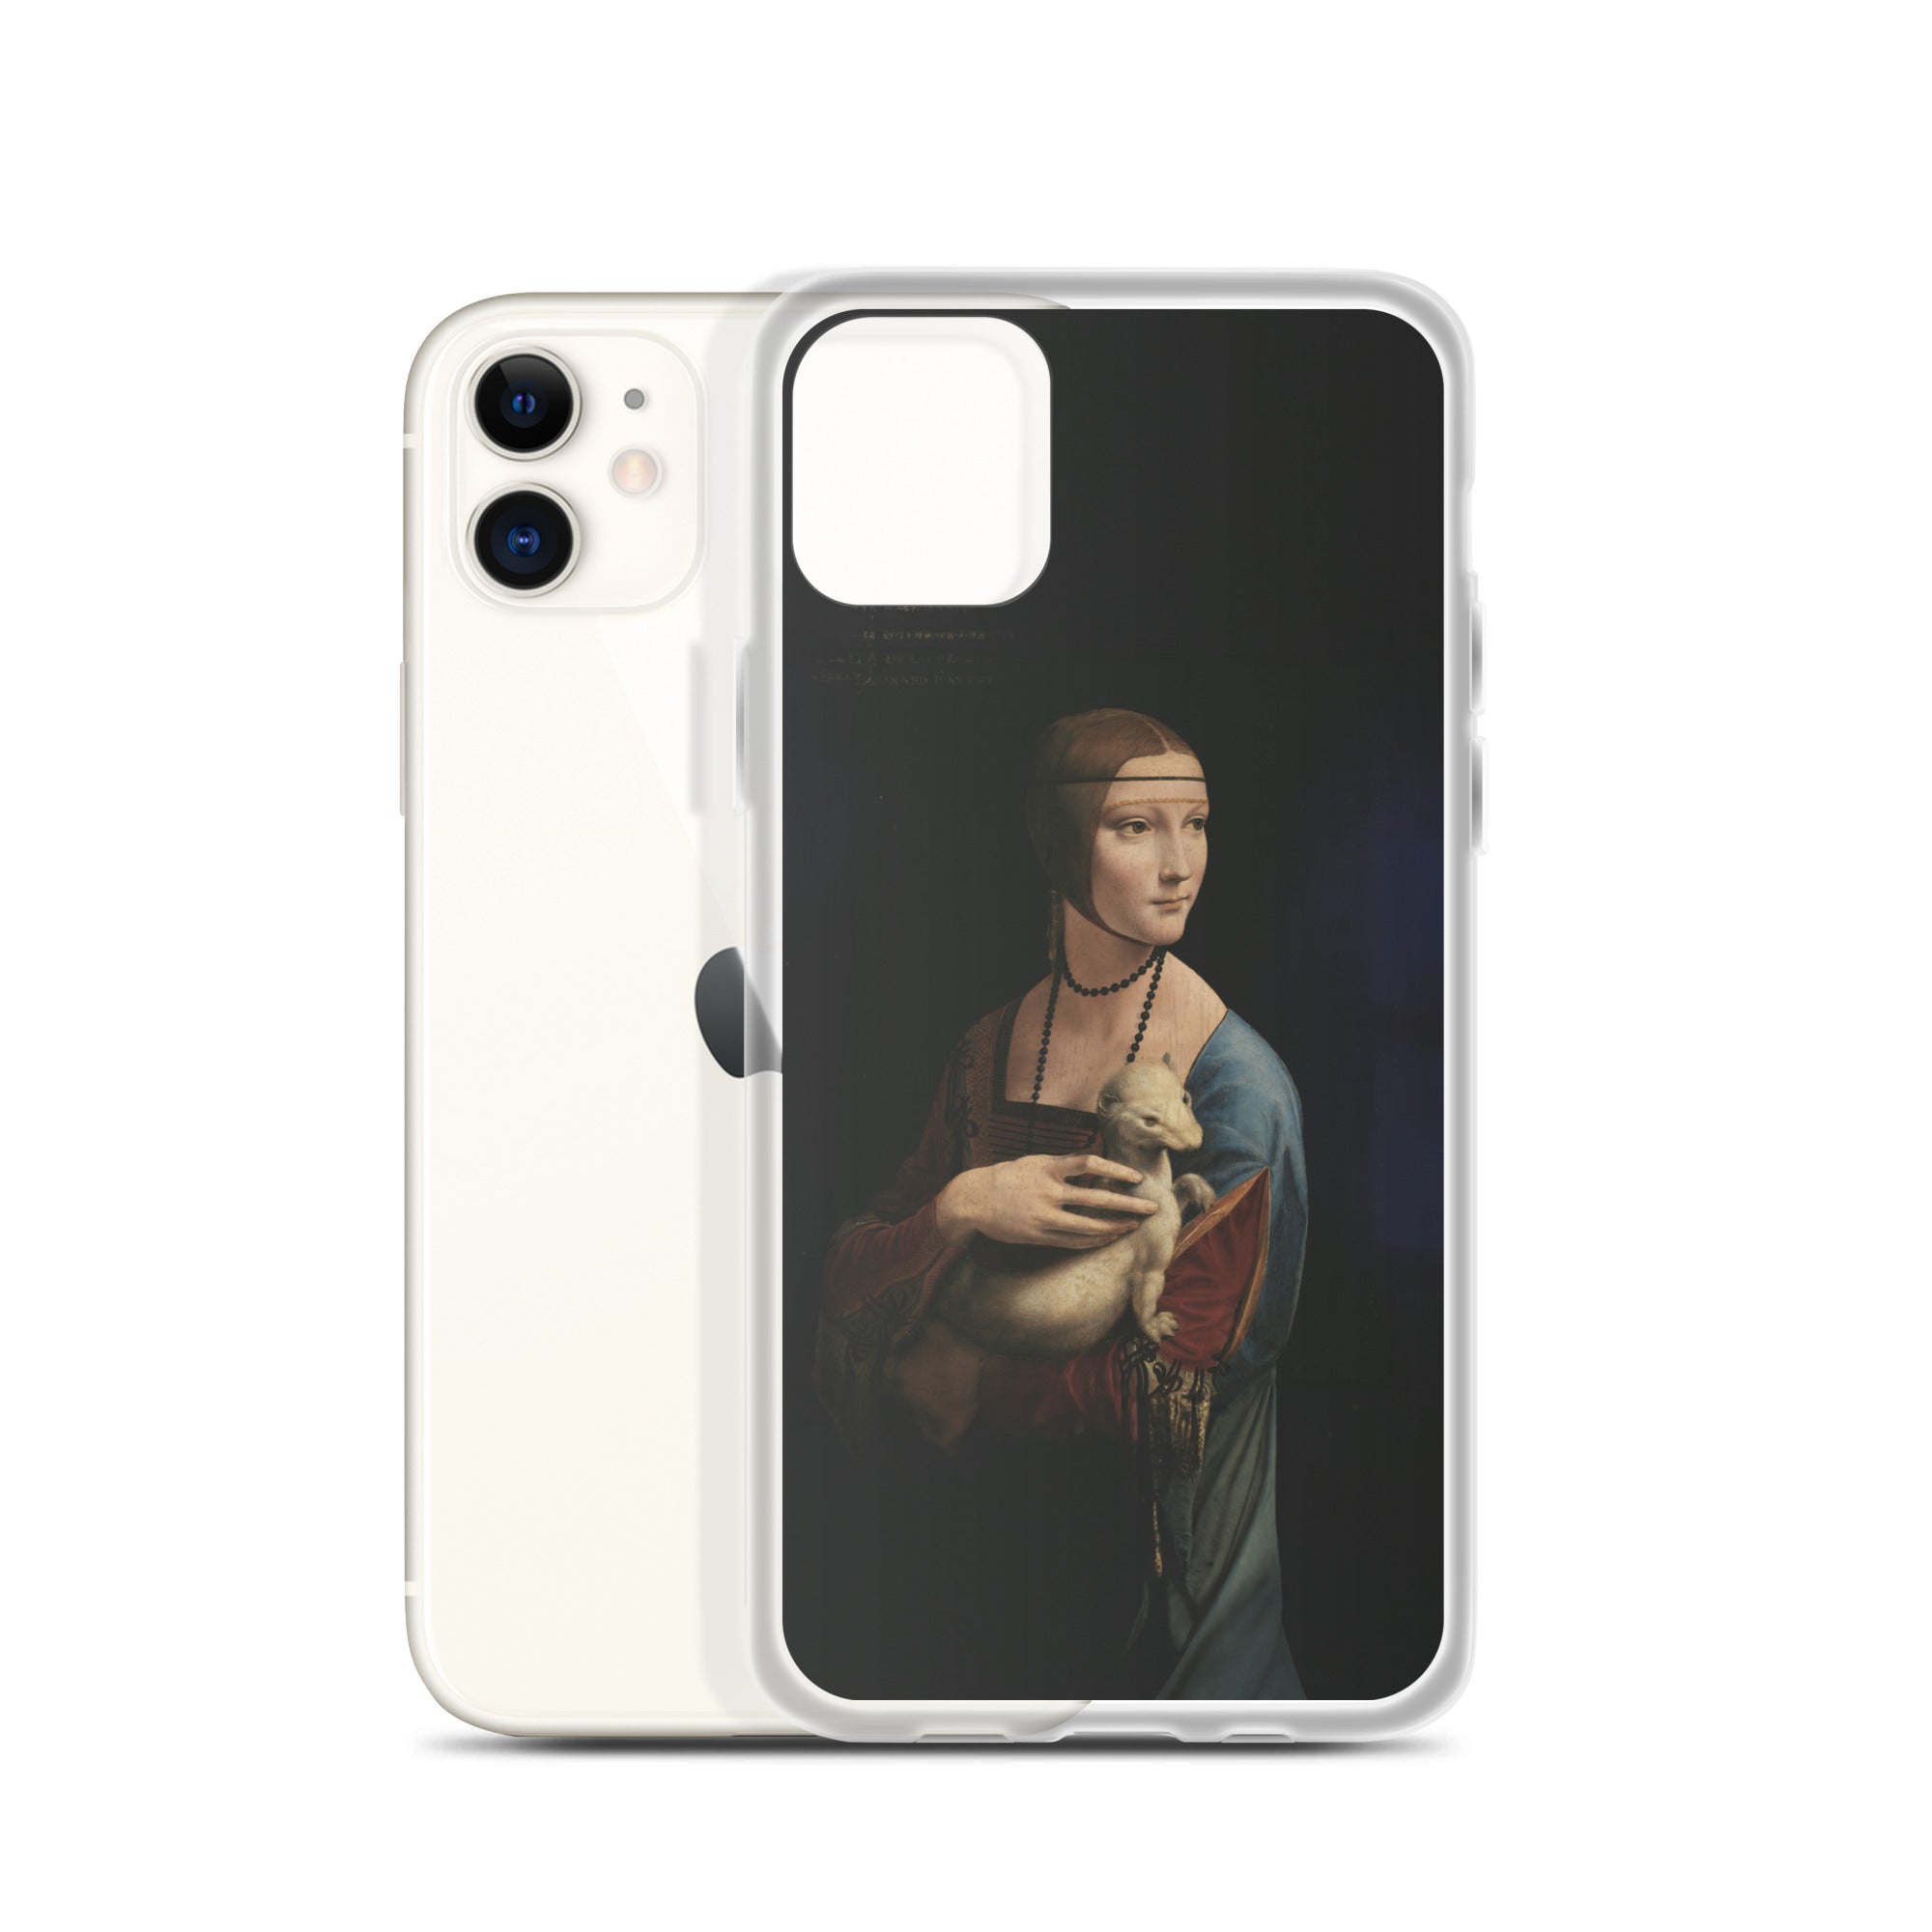 Leonardo da Vinci „Dame mit dem Hermelin“, berühmtes Gemälde, iPhone®-Hülle | Transparente Kunsthülle für iPhone®